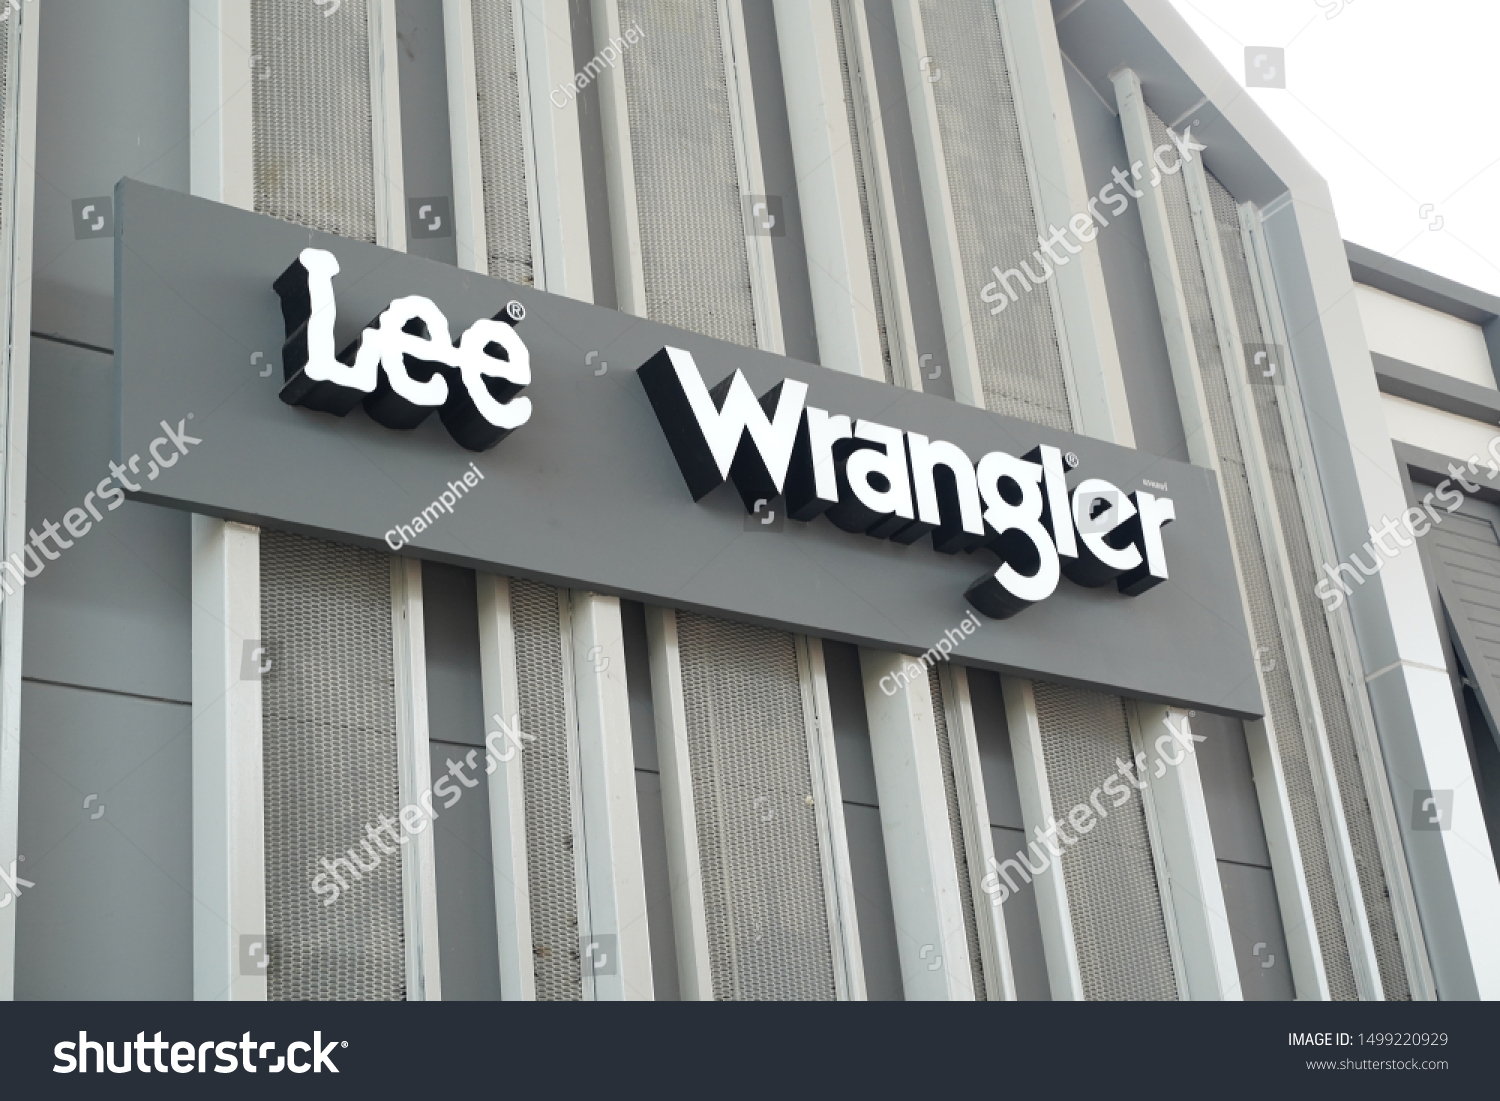 wrangler jeans outlet store